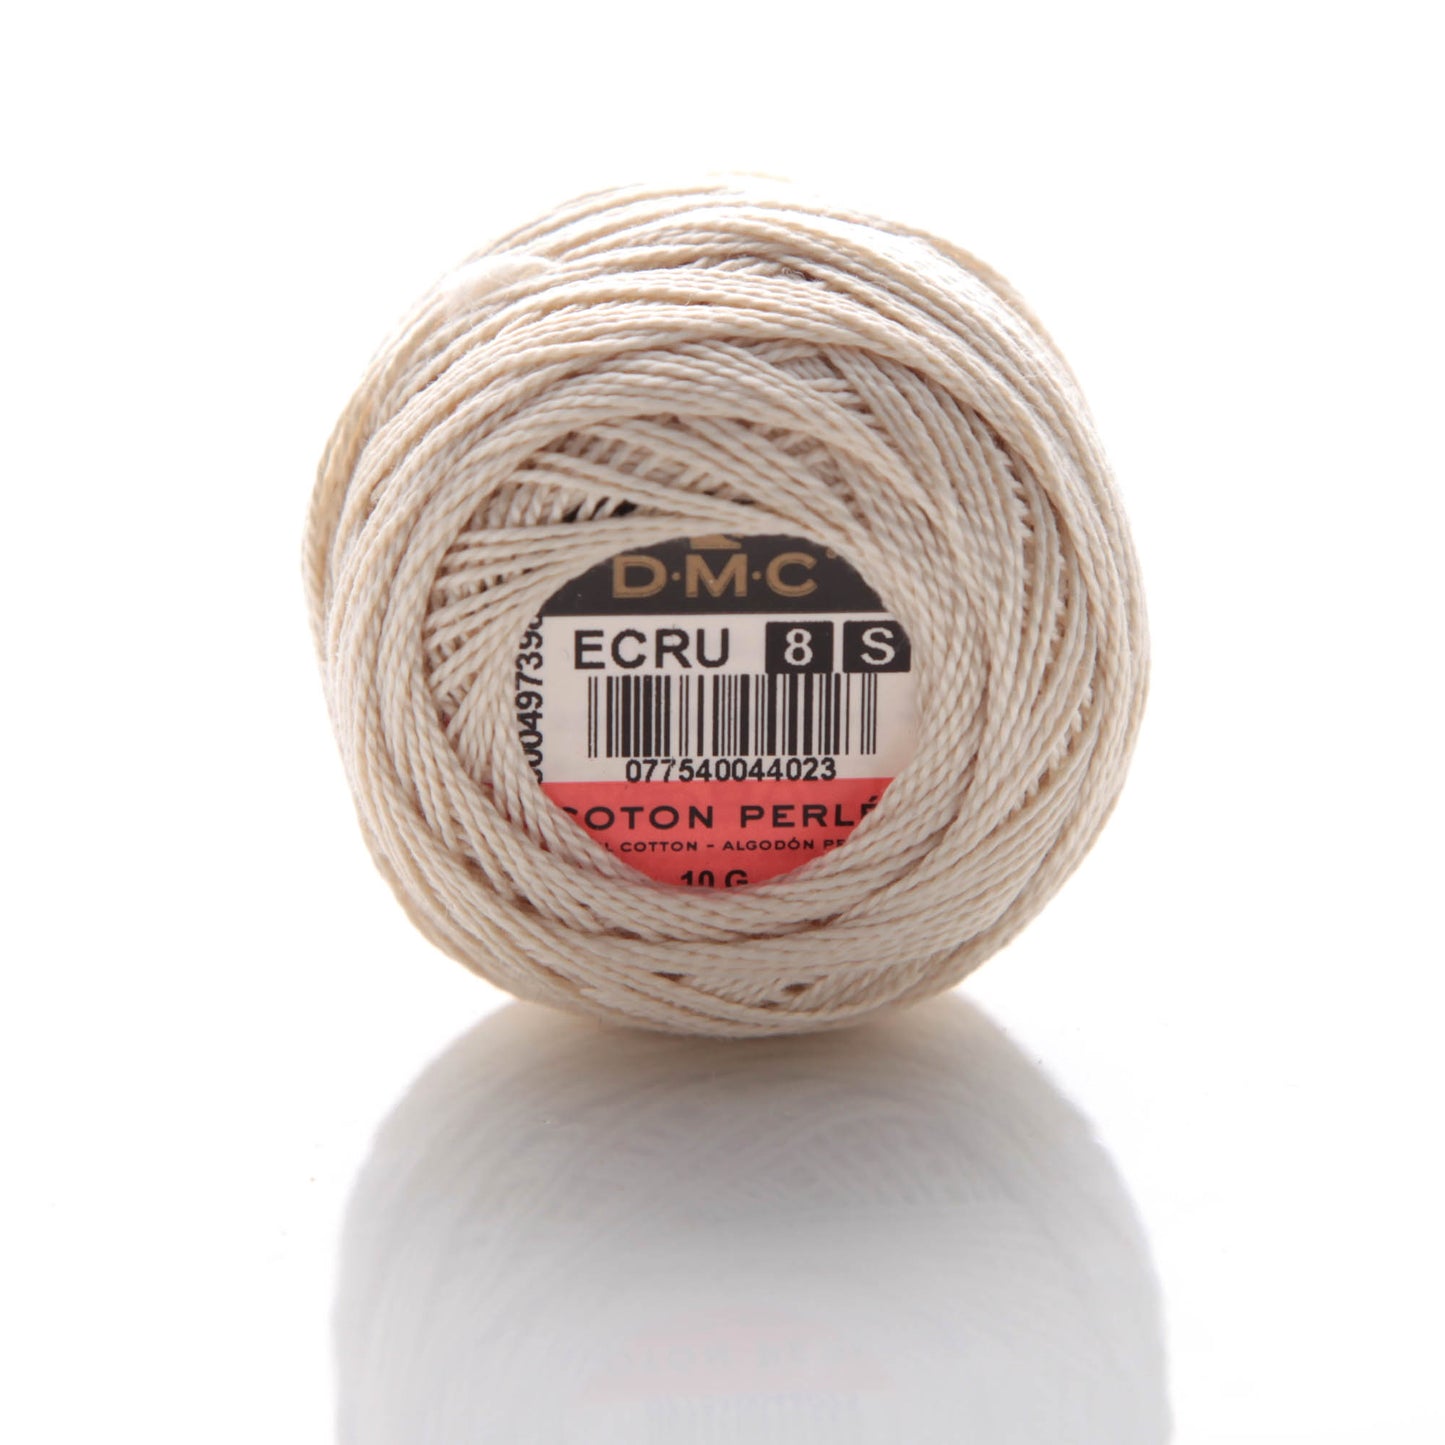 DMC Perle Cotton size 8 - 077540044023